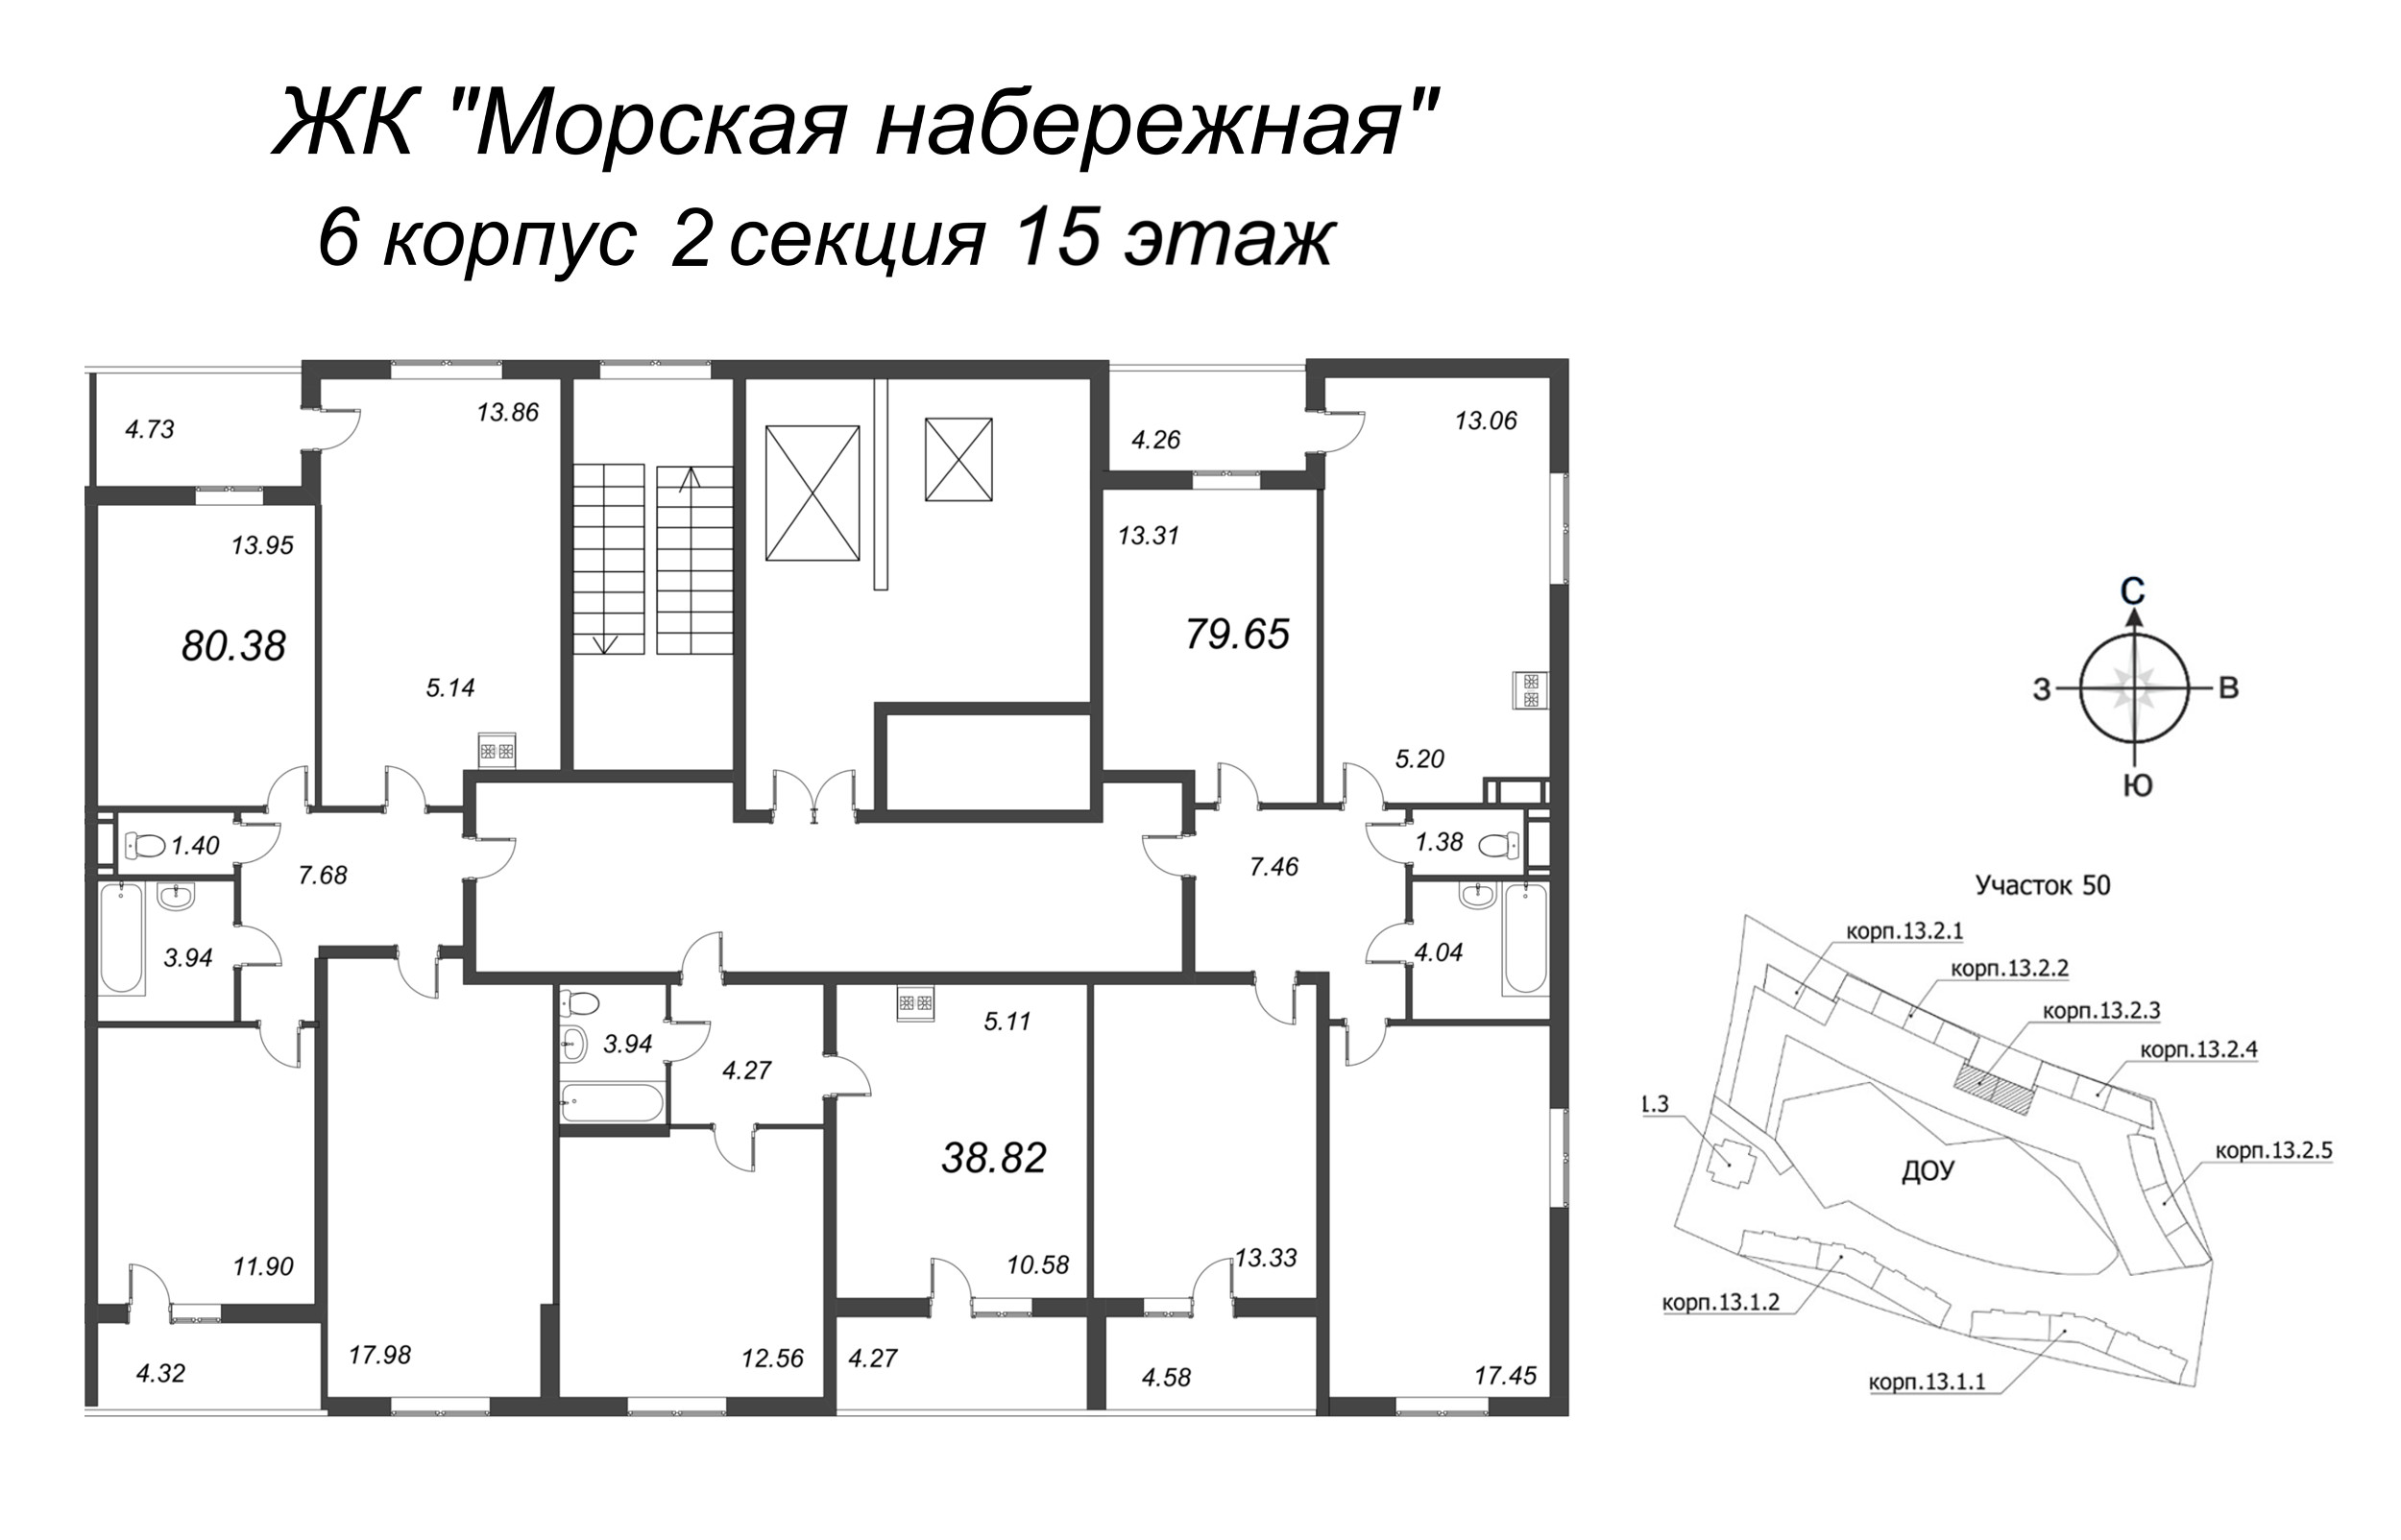 4-комнатная (Евро) квартира, 78.7 м² - планировка этажа